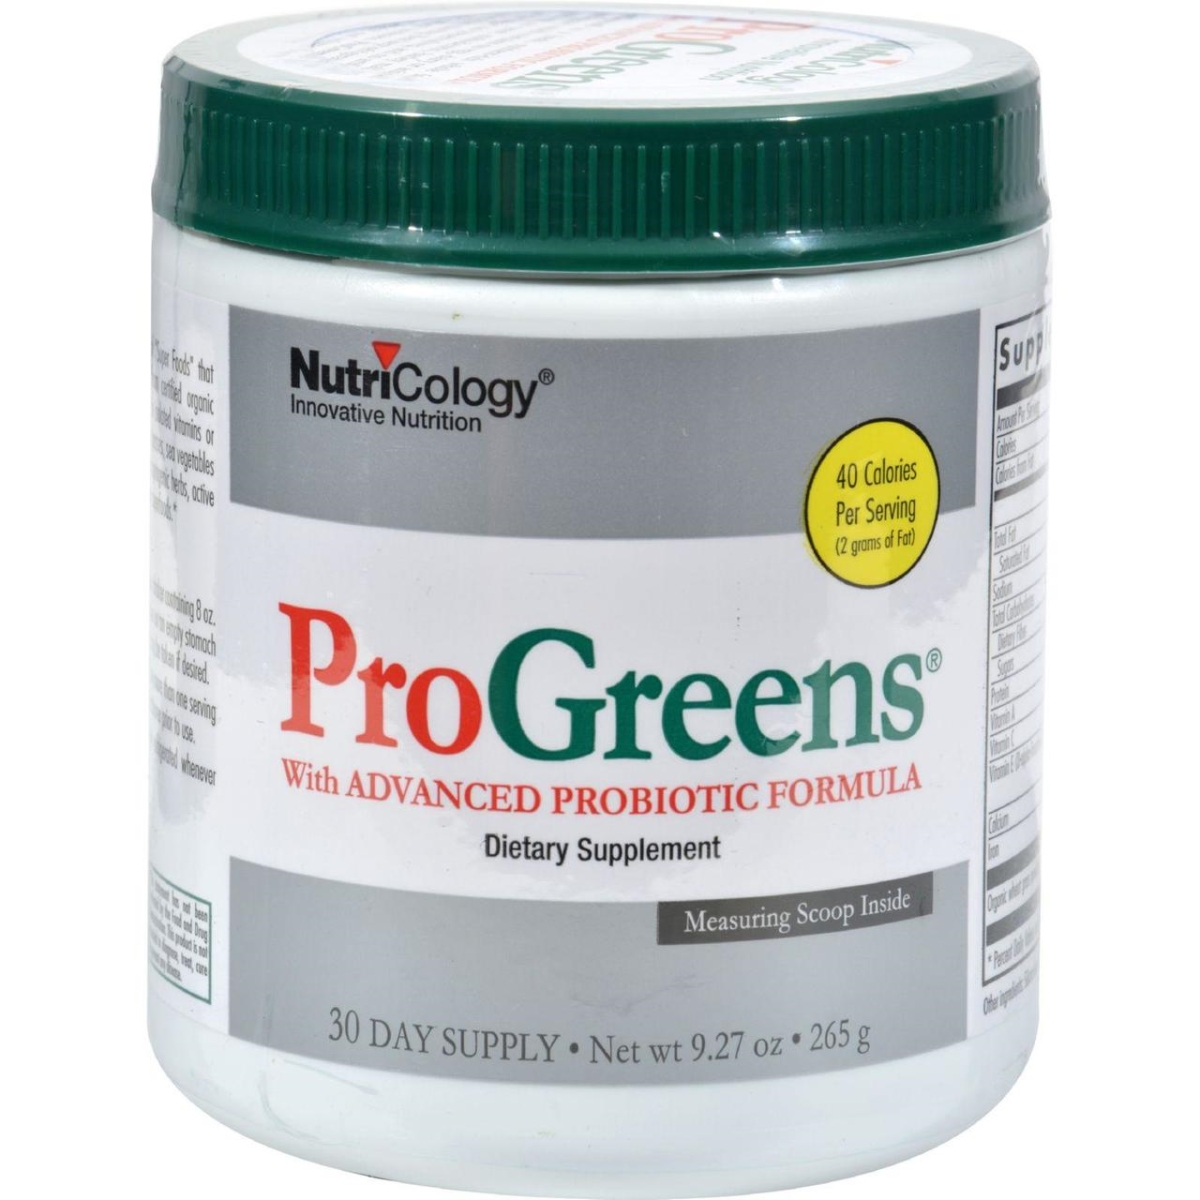 Hg0889147 9.27 Oz Pro Greens With Advanced Probiotic Formula